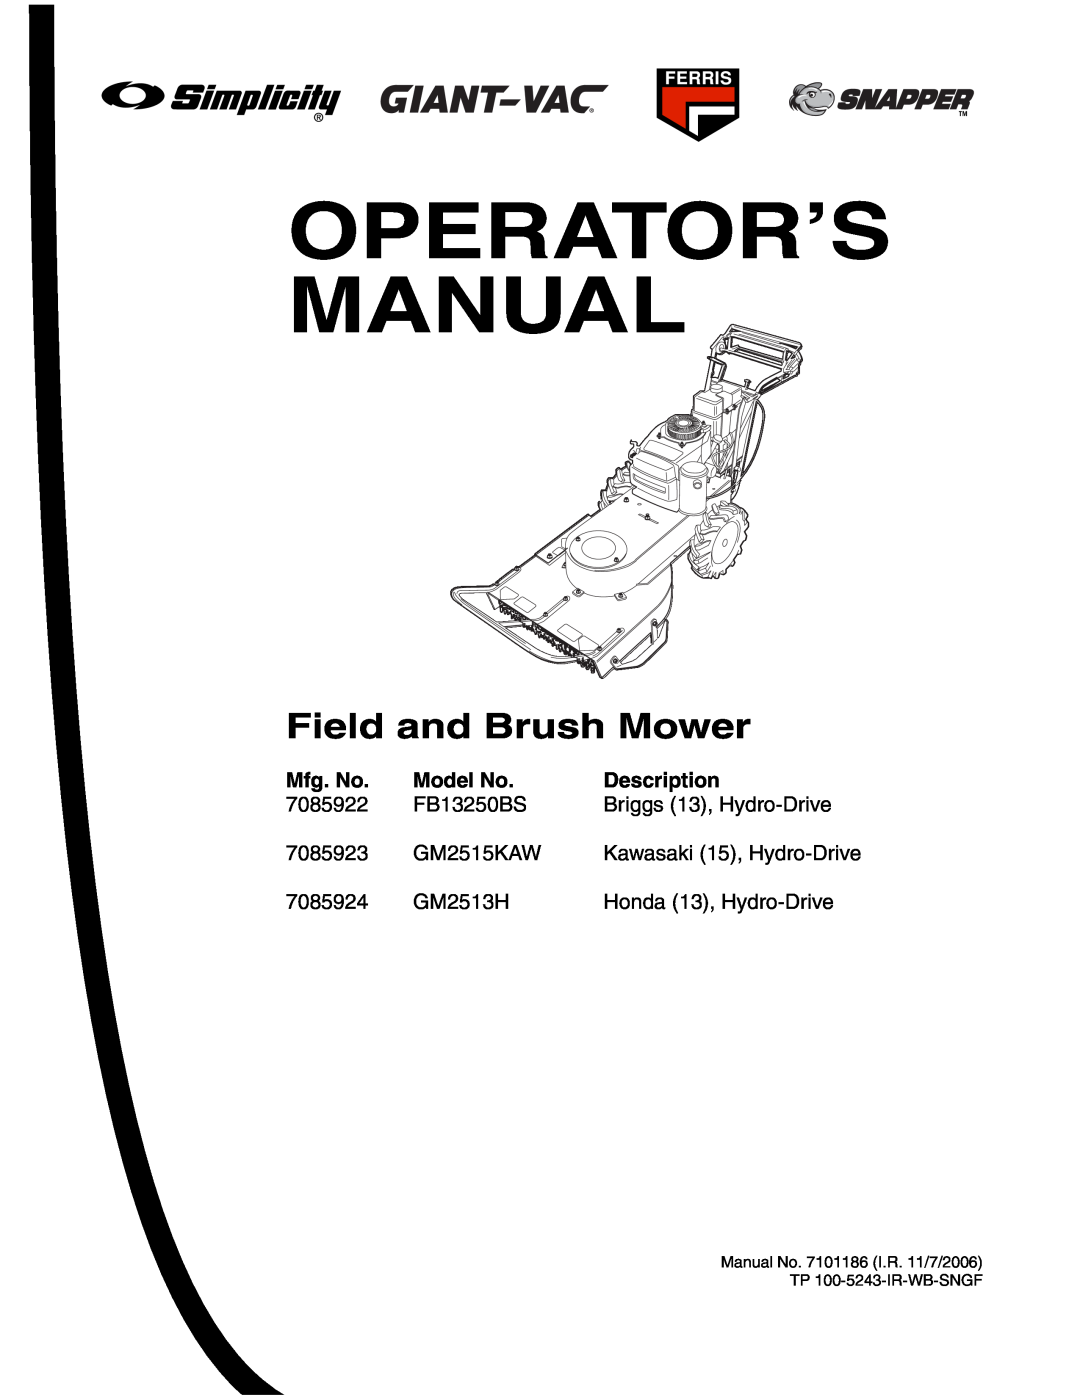 Briggs & Stratton FB13250BS manual Mfg. No, Model No, Description, Operator’S Manual, Field and Brush Mower, 7085922 